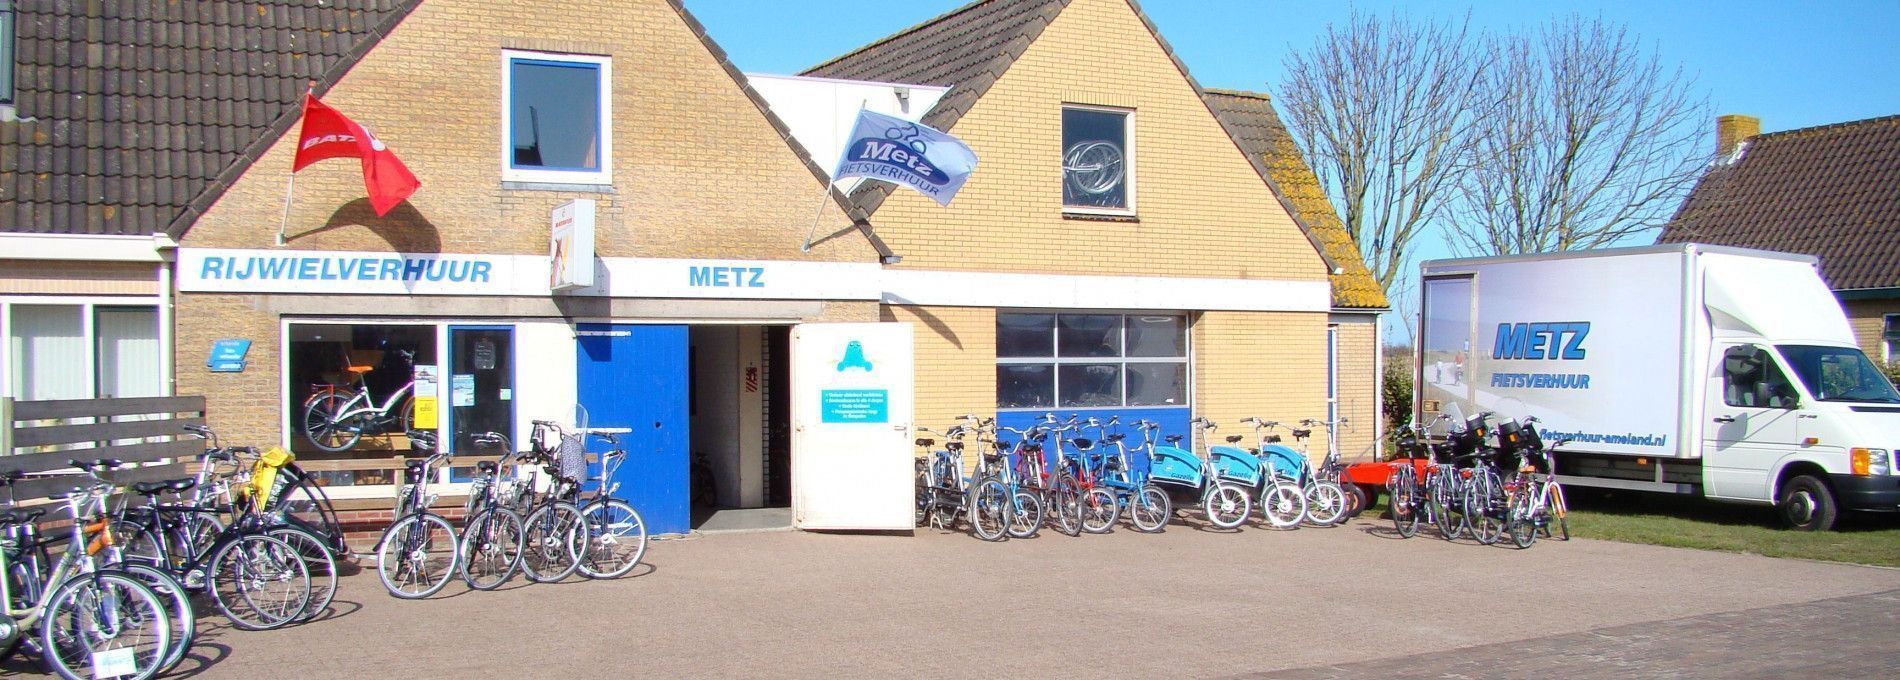 Bike rental Metz - Tourist Information “VVV” Ameland